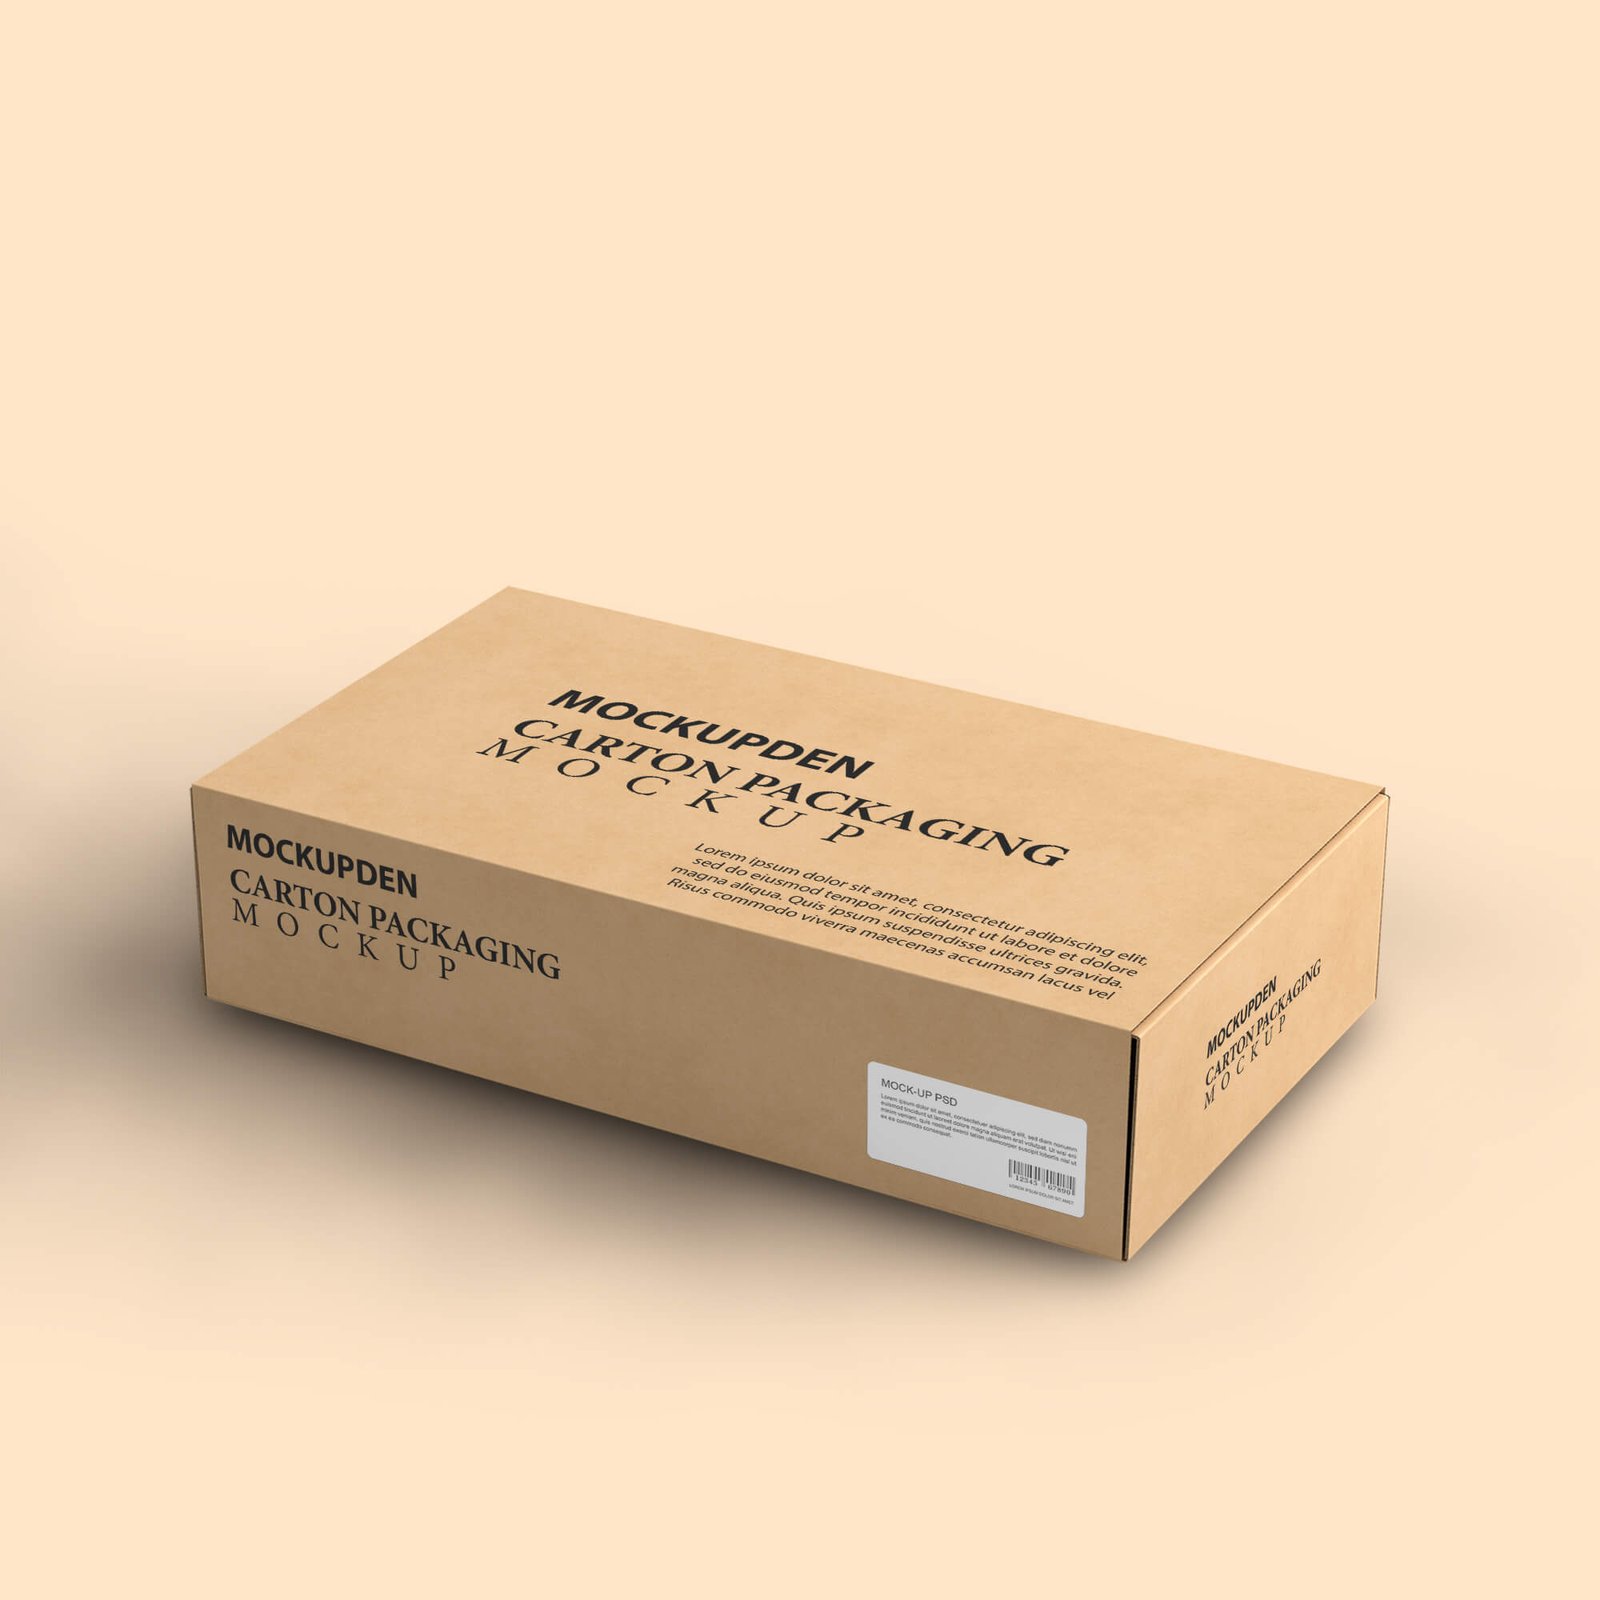 Design Free Carton Packaging Mockup PSD Template